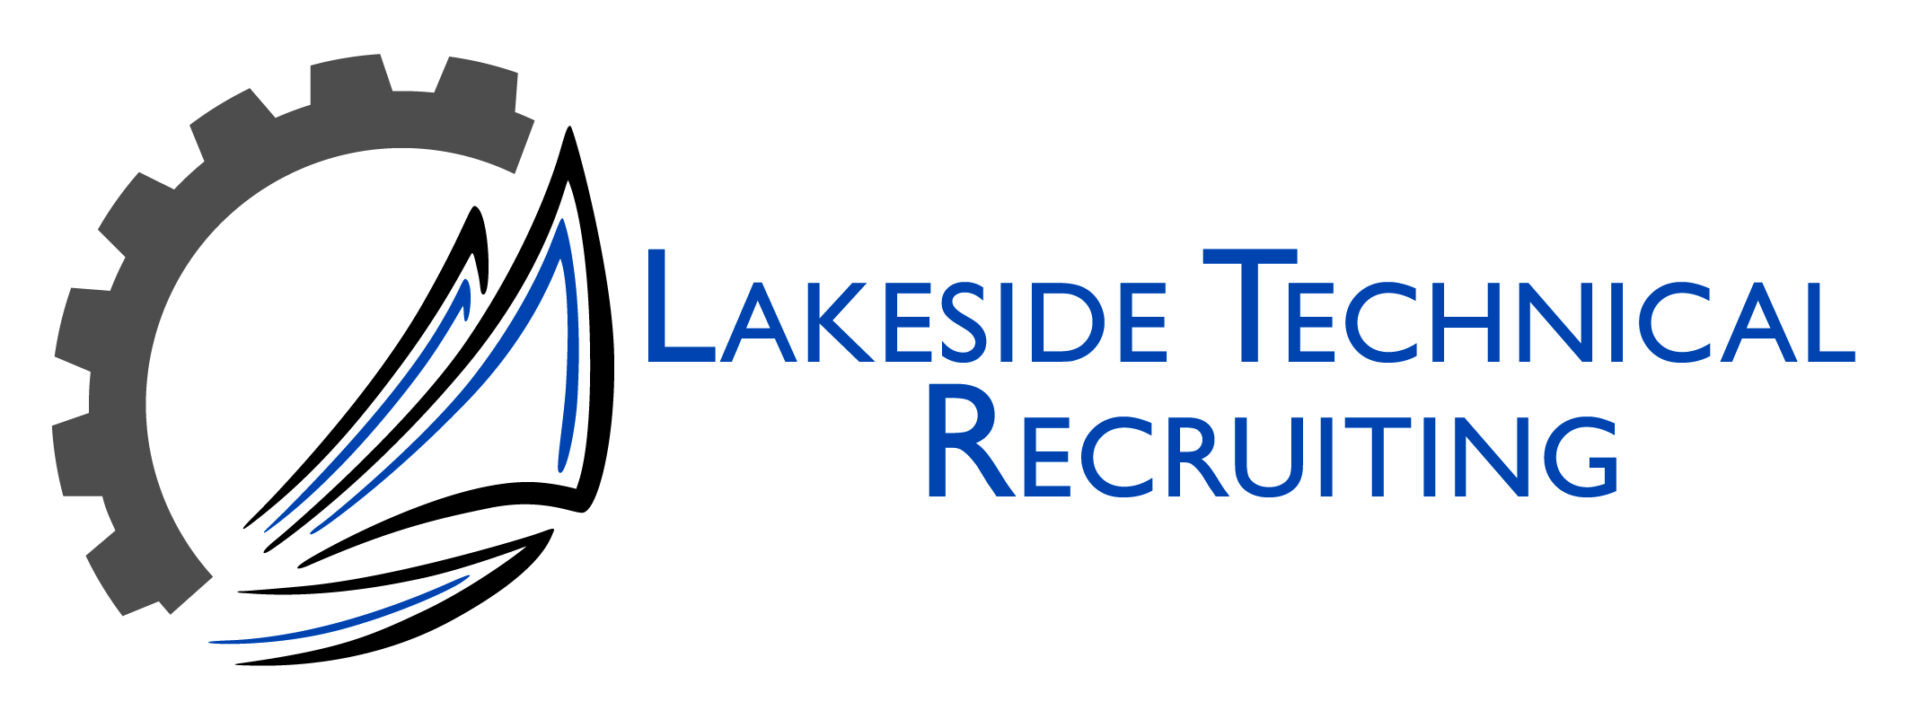 Lakeside Technical Recruiting